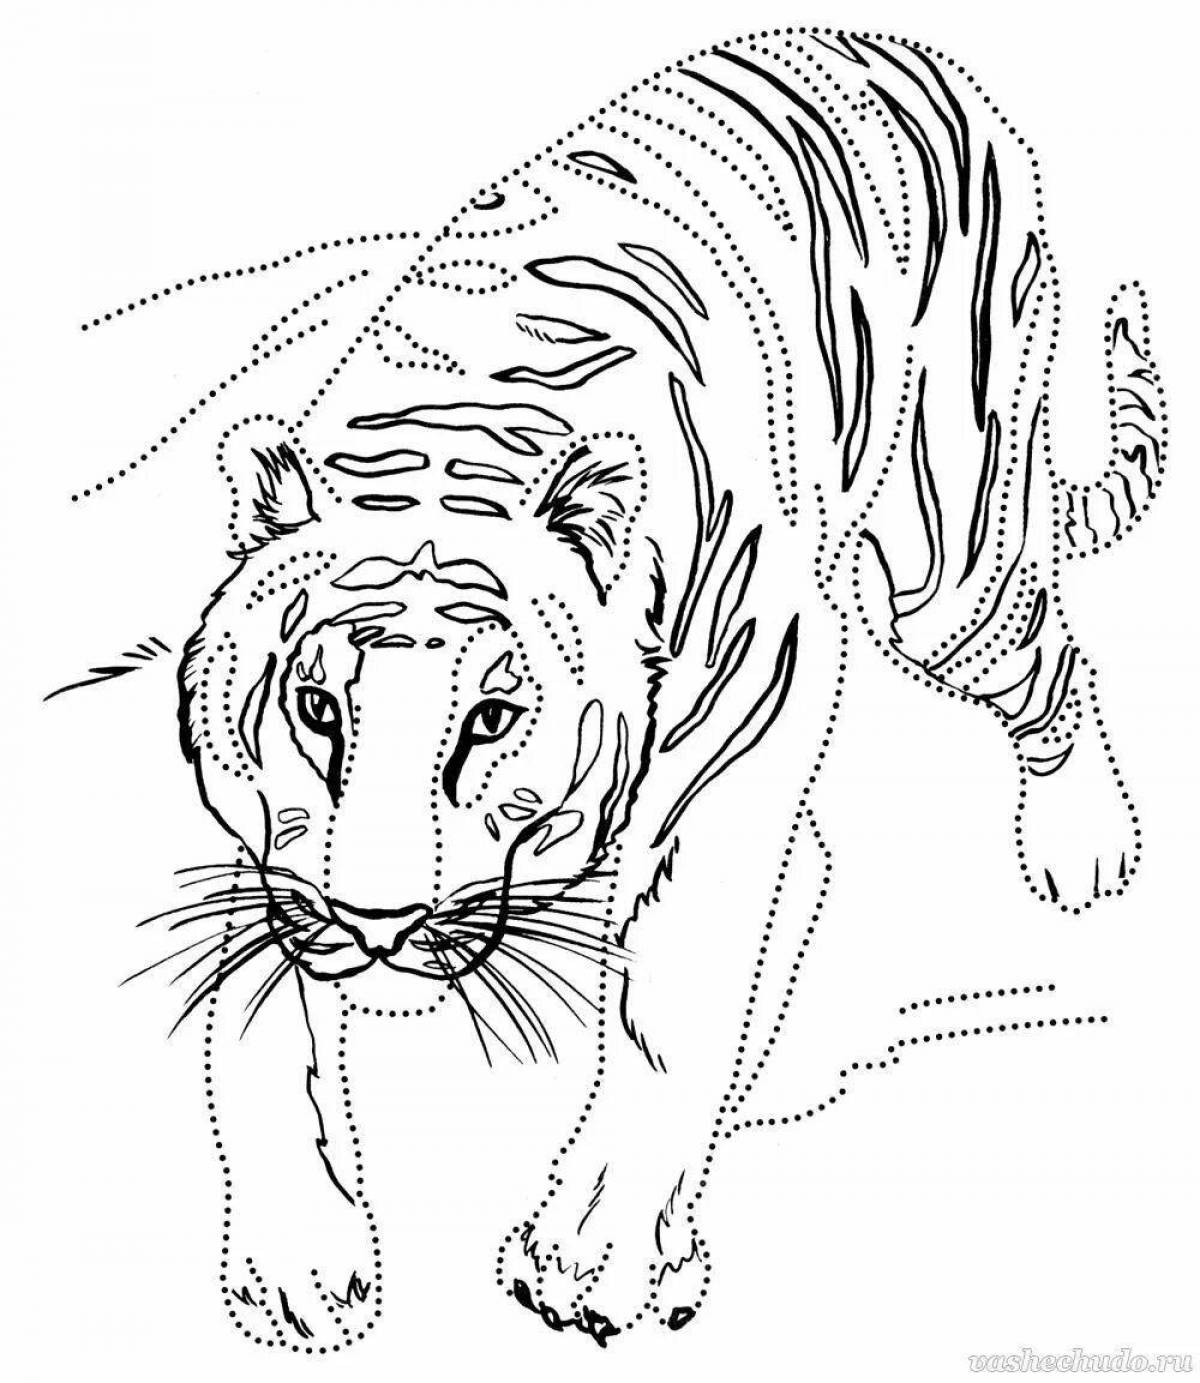 Colouring the stunning Ussuri tiger